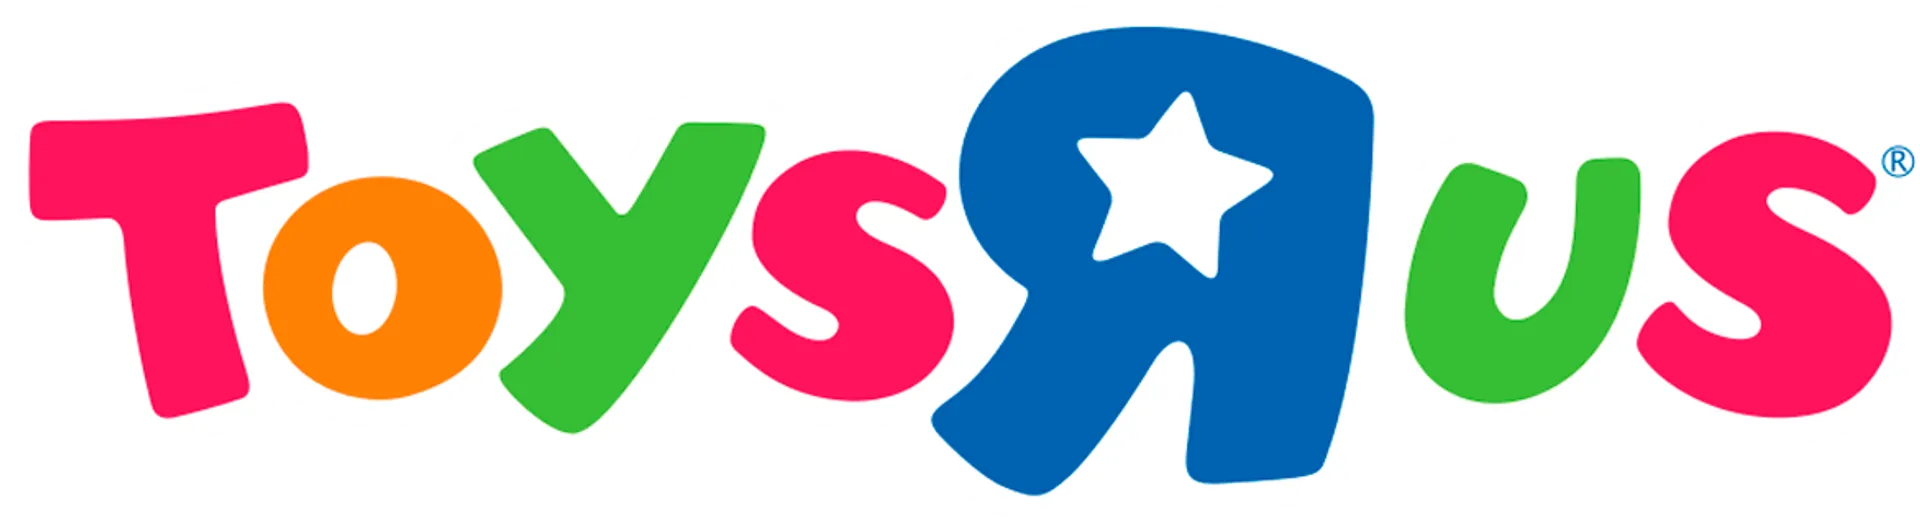 TOYS R US logo